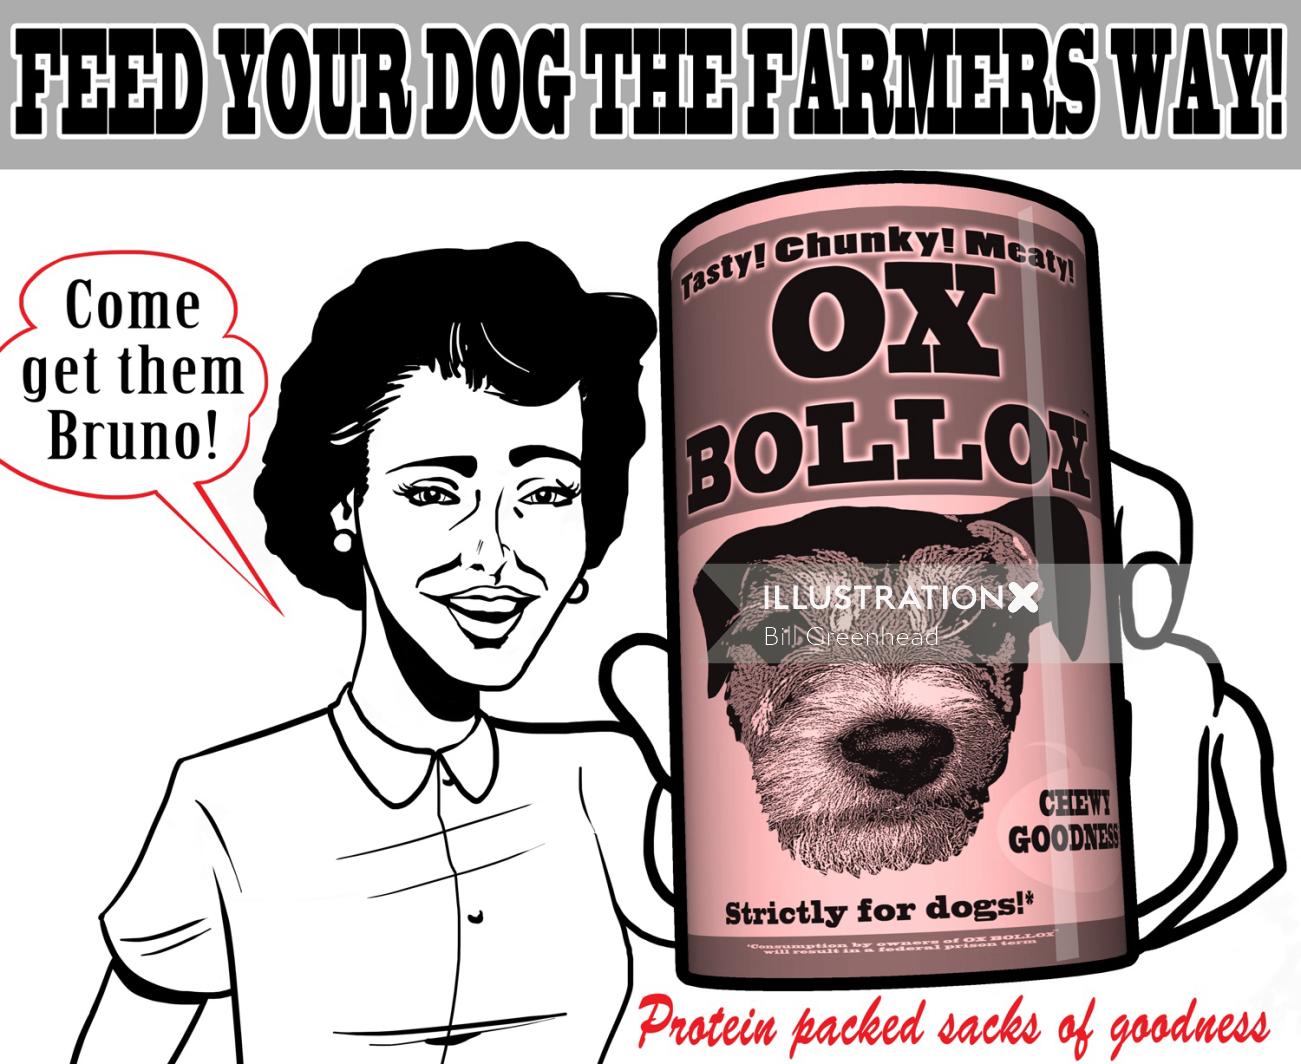 retro illustration of dog food